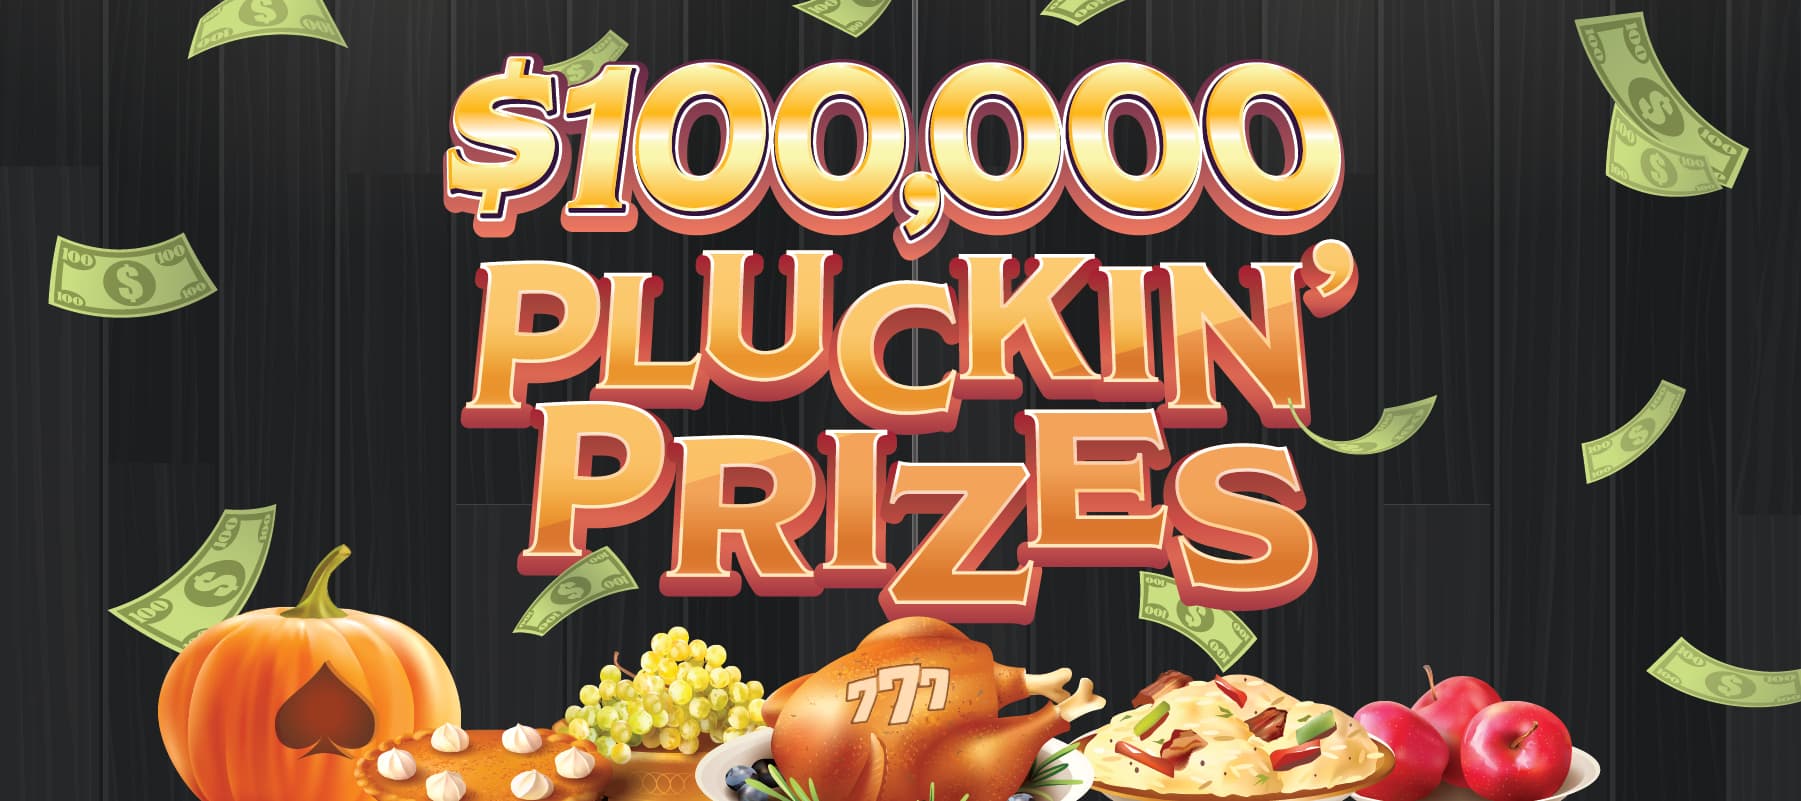 $100,000 Pluckin’ Prizes